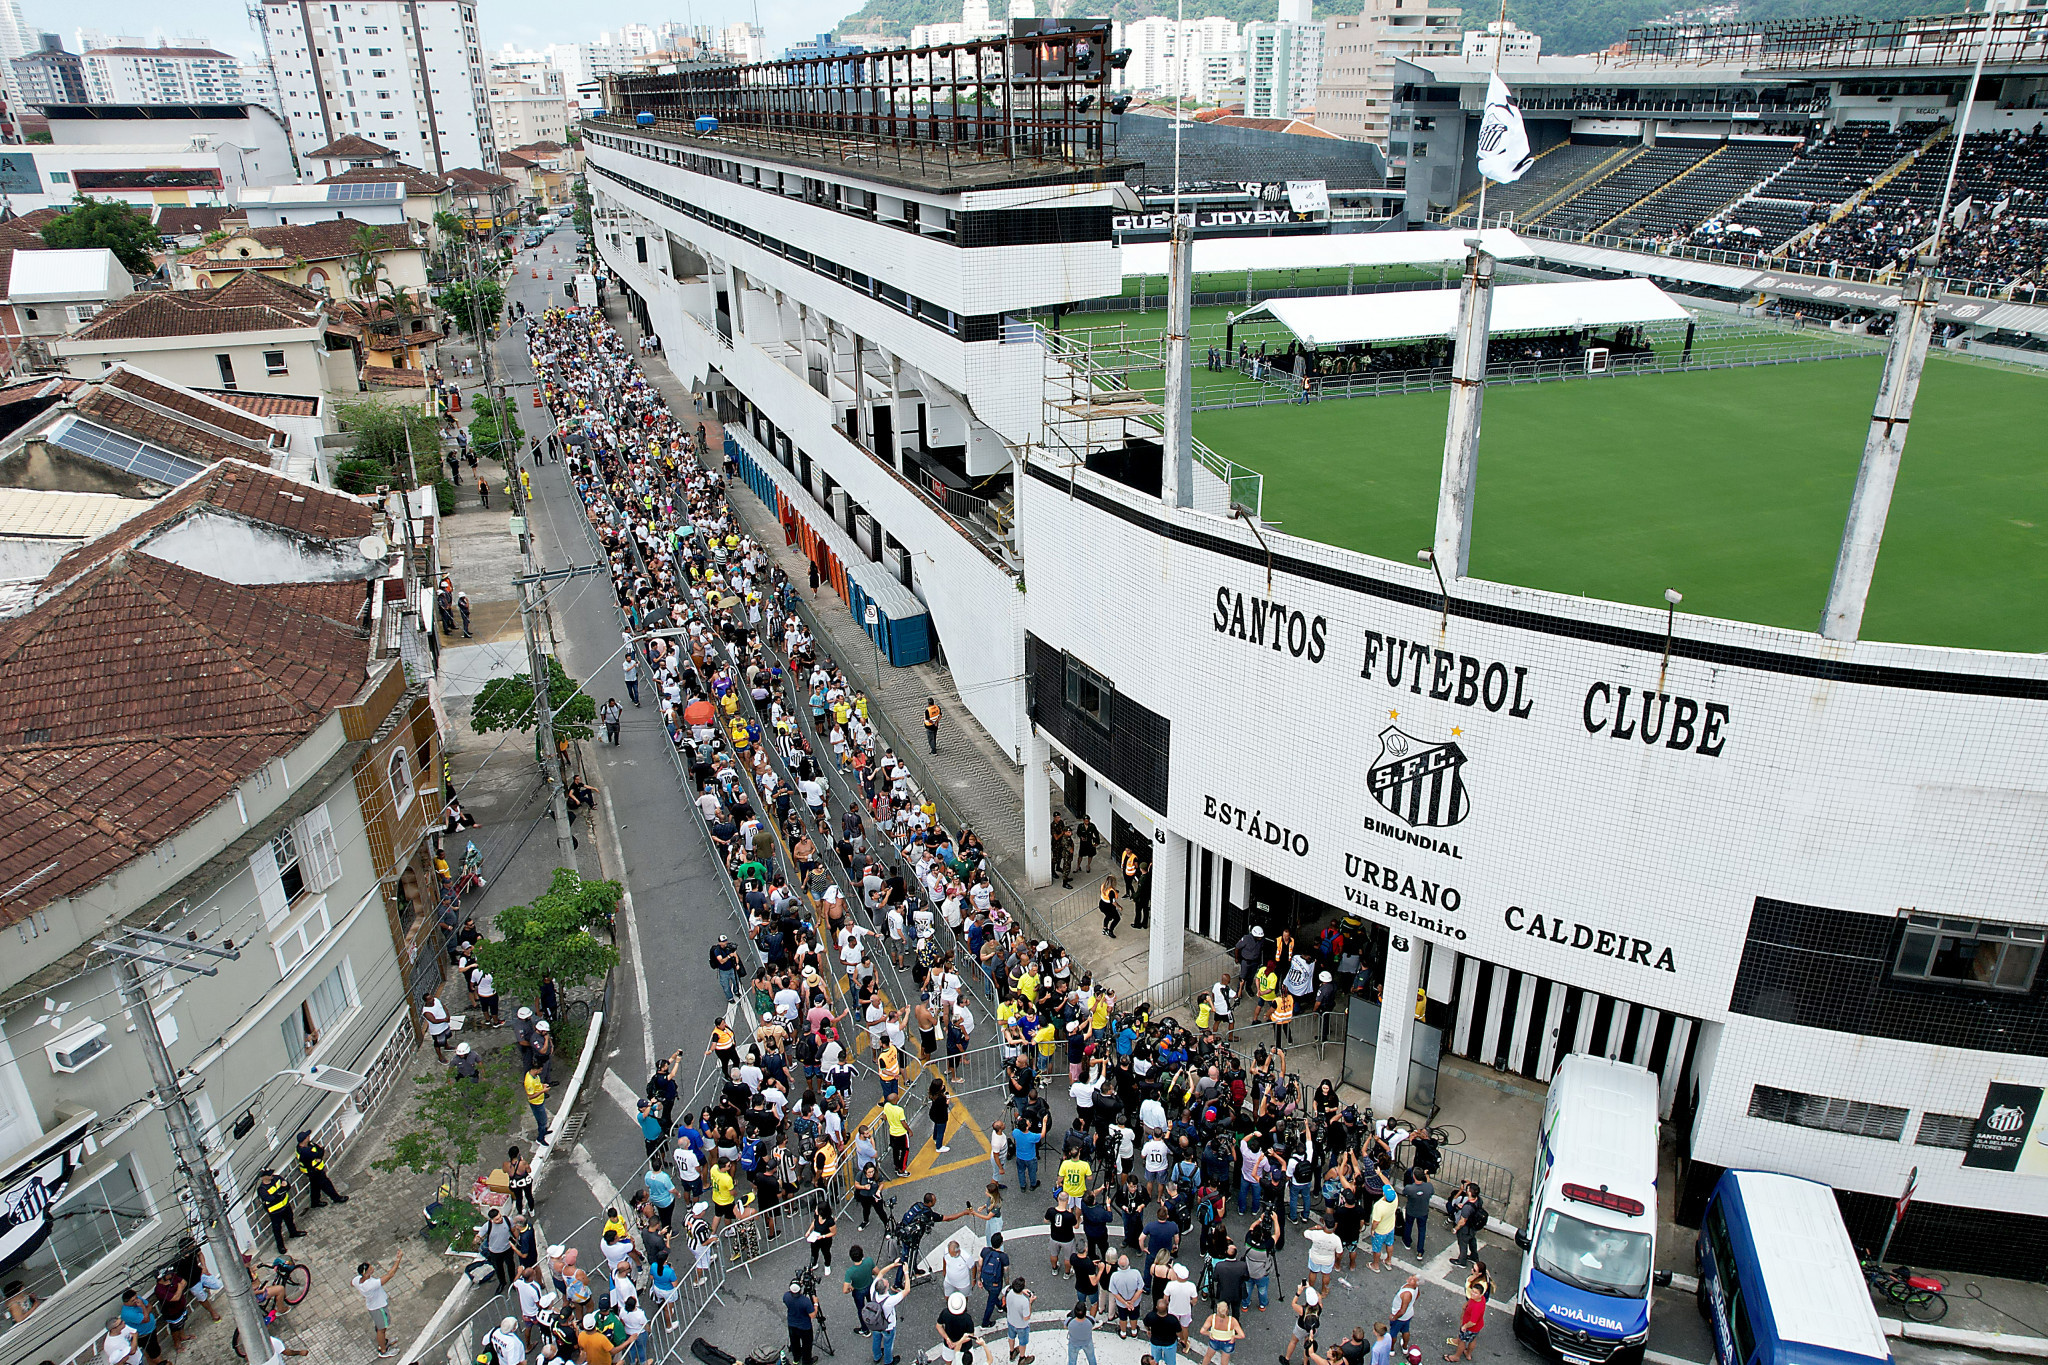 Thousands mourn Pelé's death at public wake in Santos